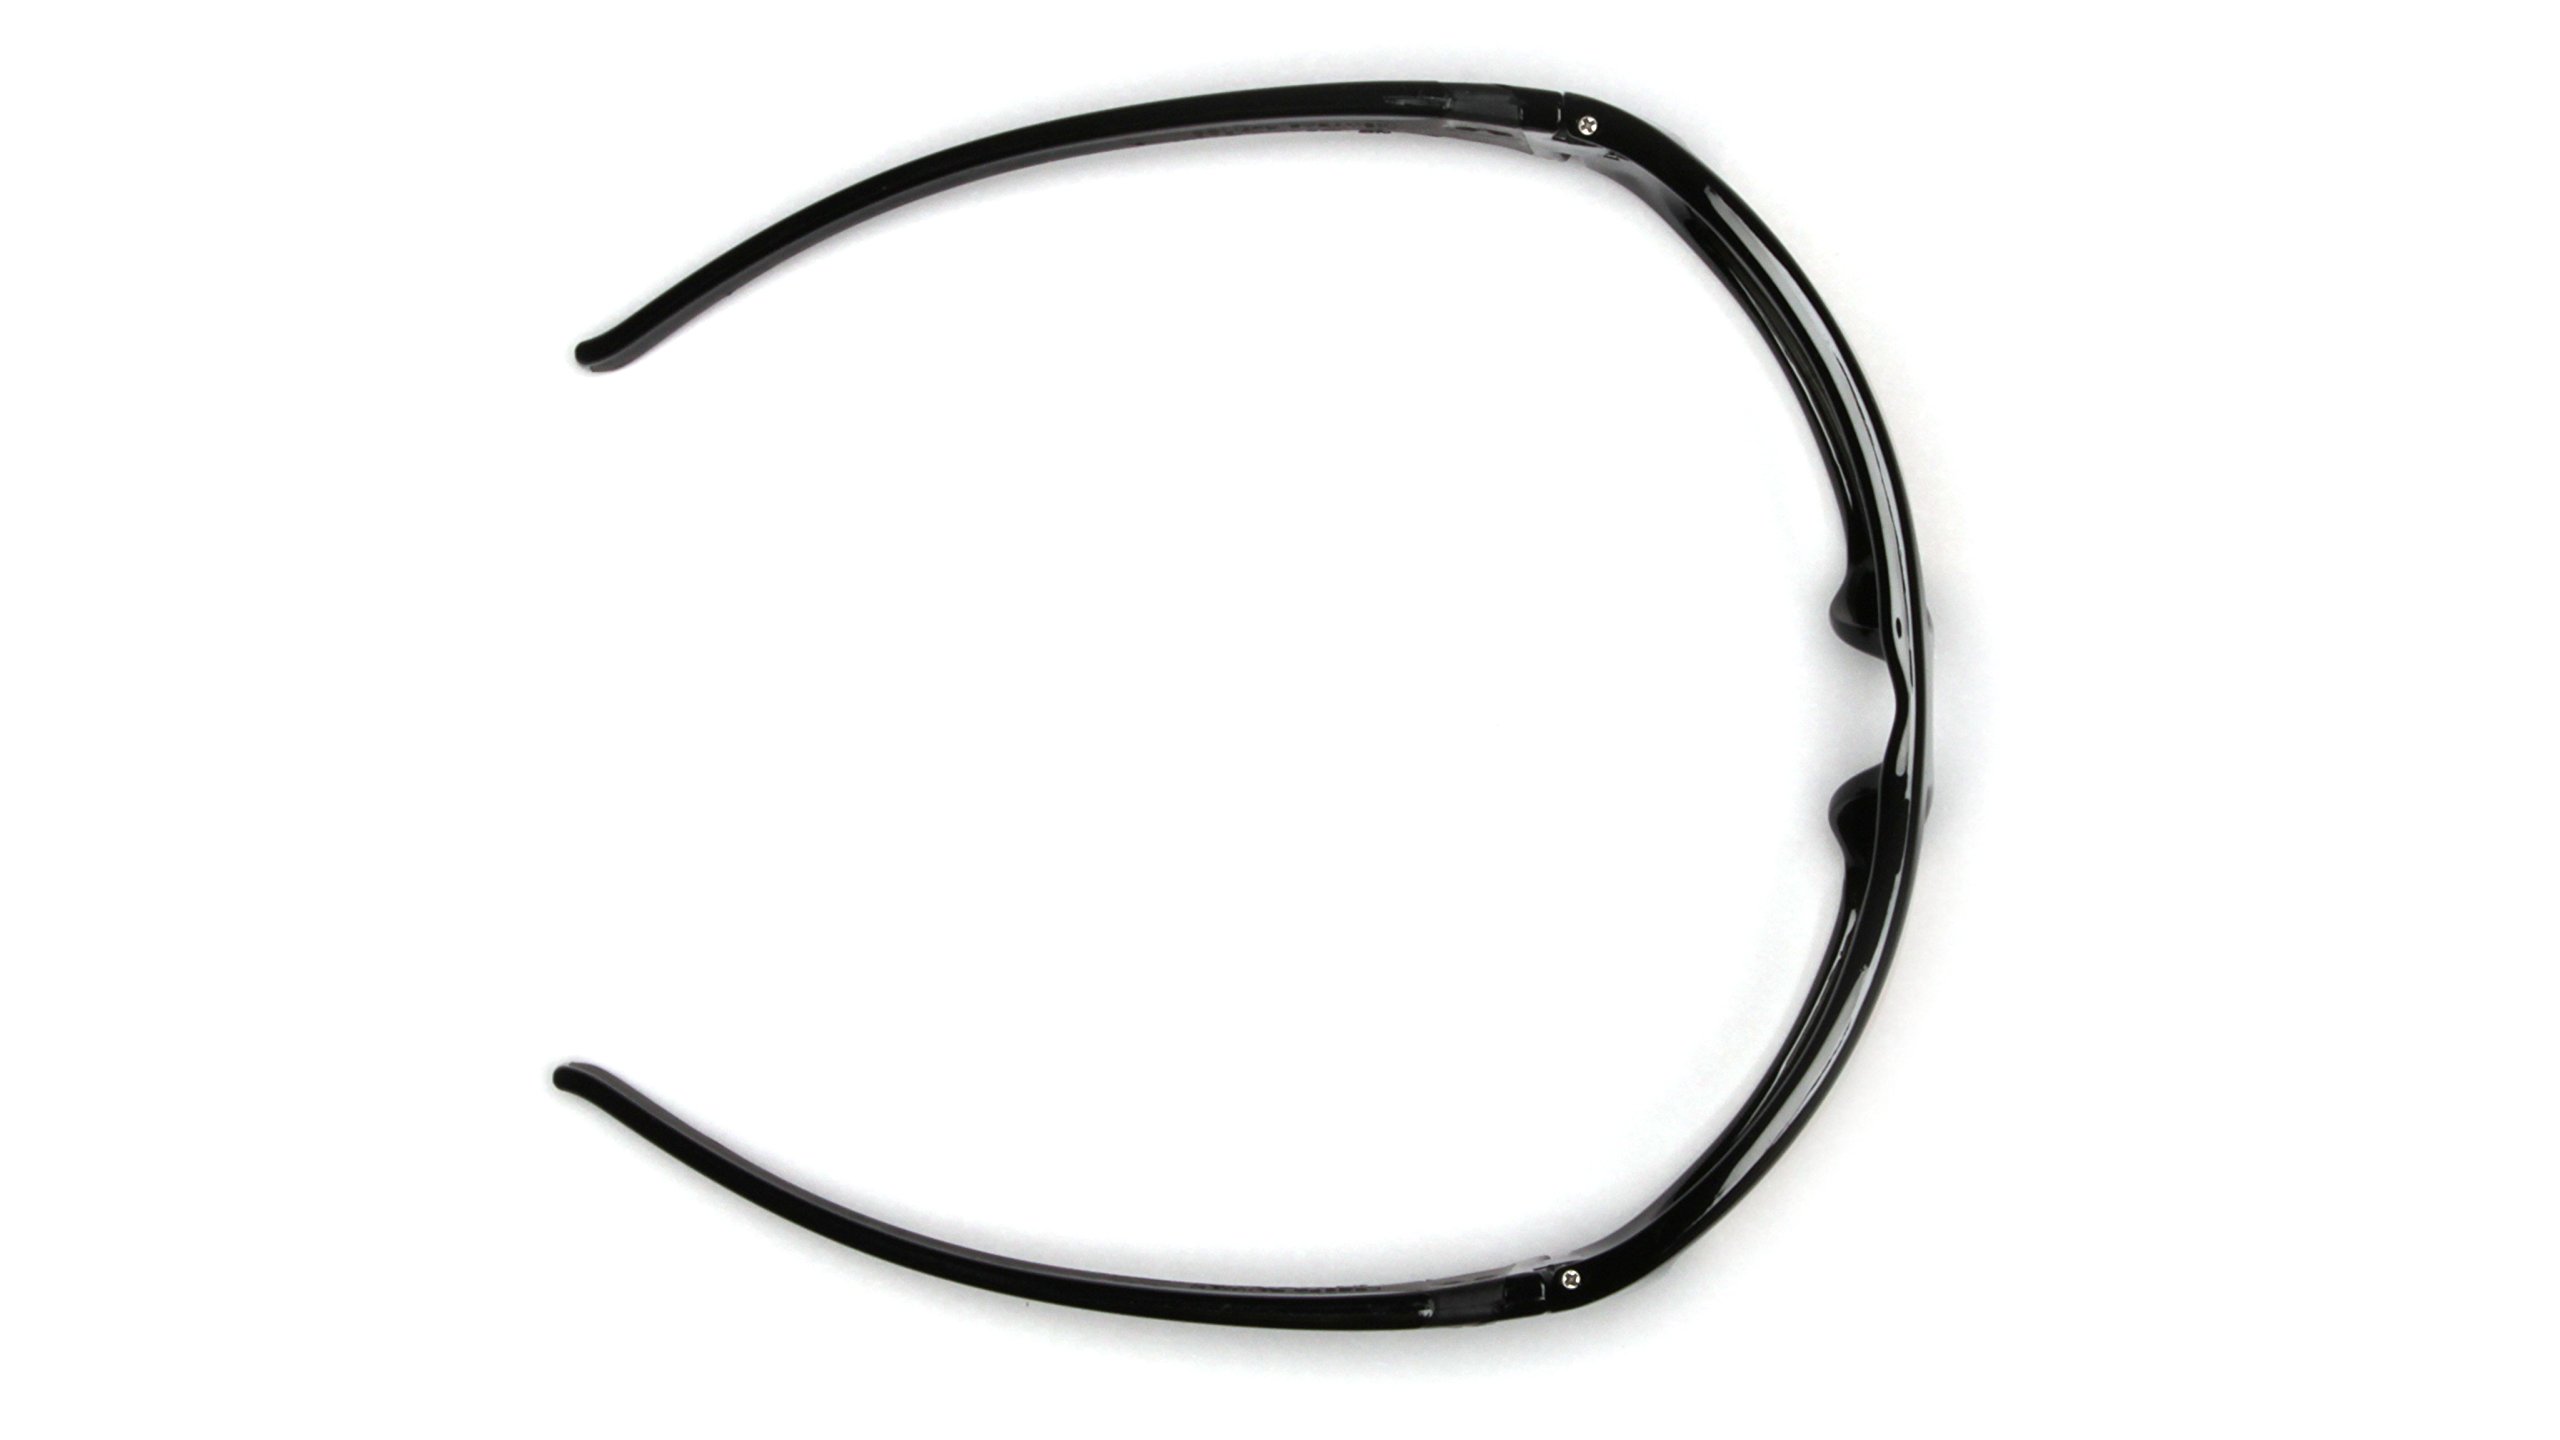 Pyramex Goliath Safety Eyewear, Black Frame, Gray Polarized Lens